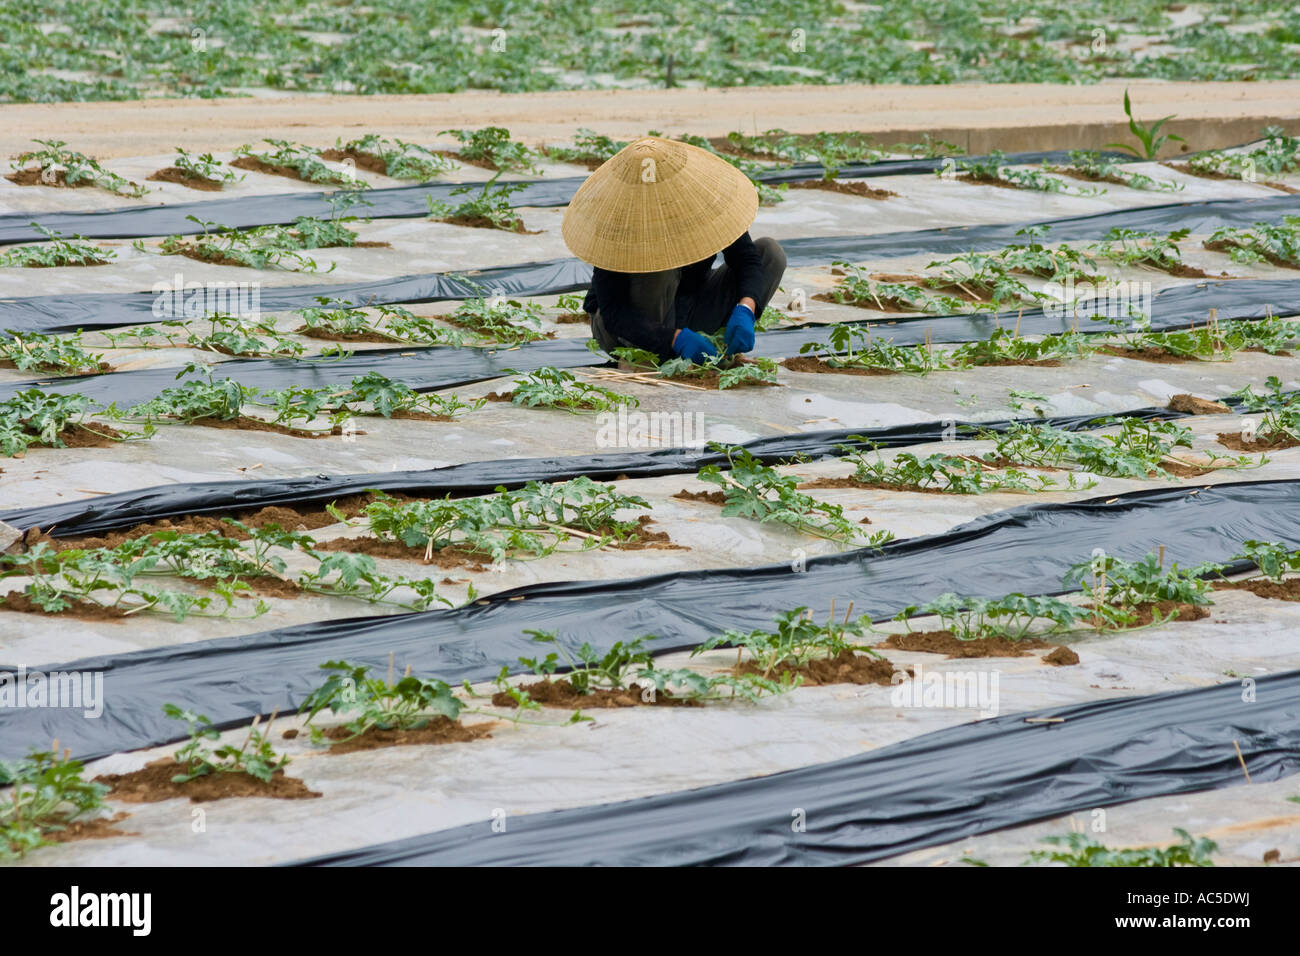 Koreanerin in Südkorea Wassermelone Feldern arbeiten Stockfoto